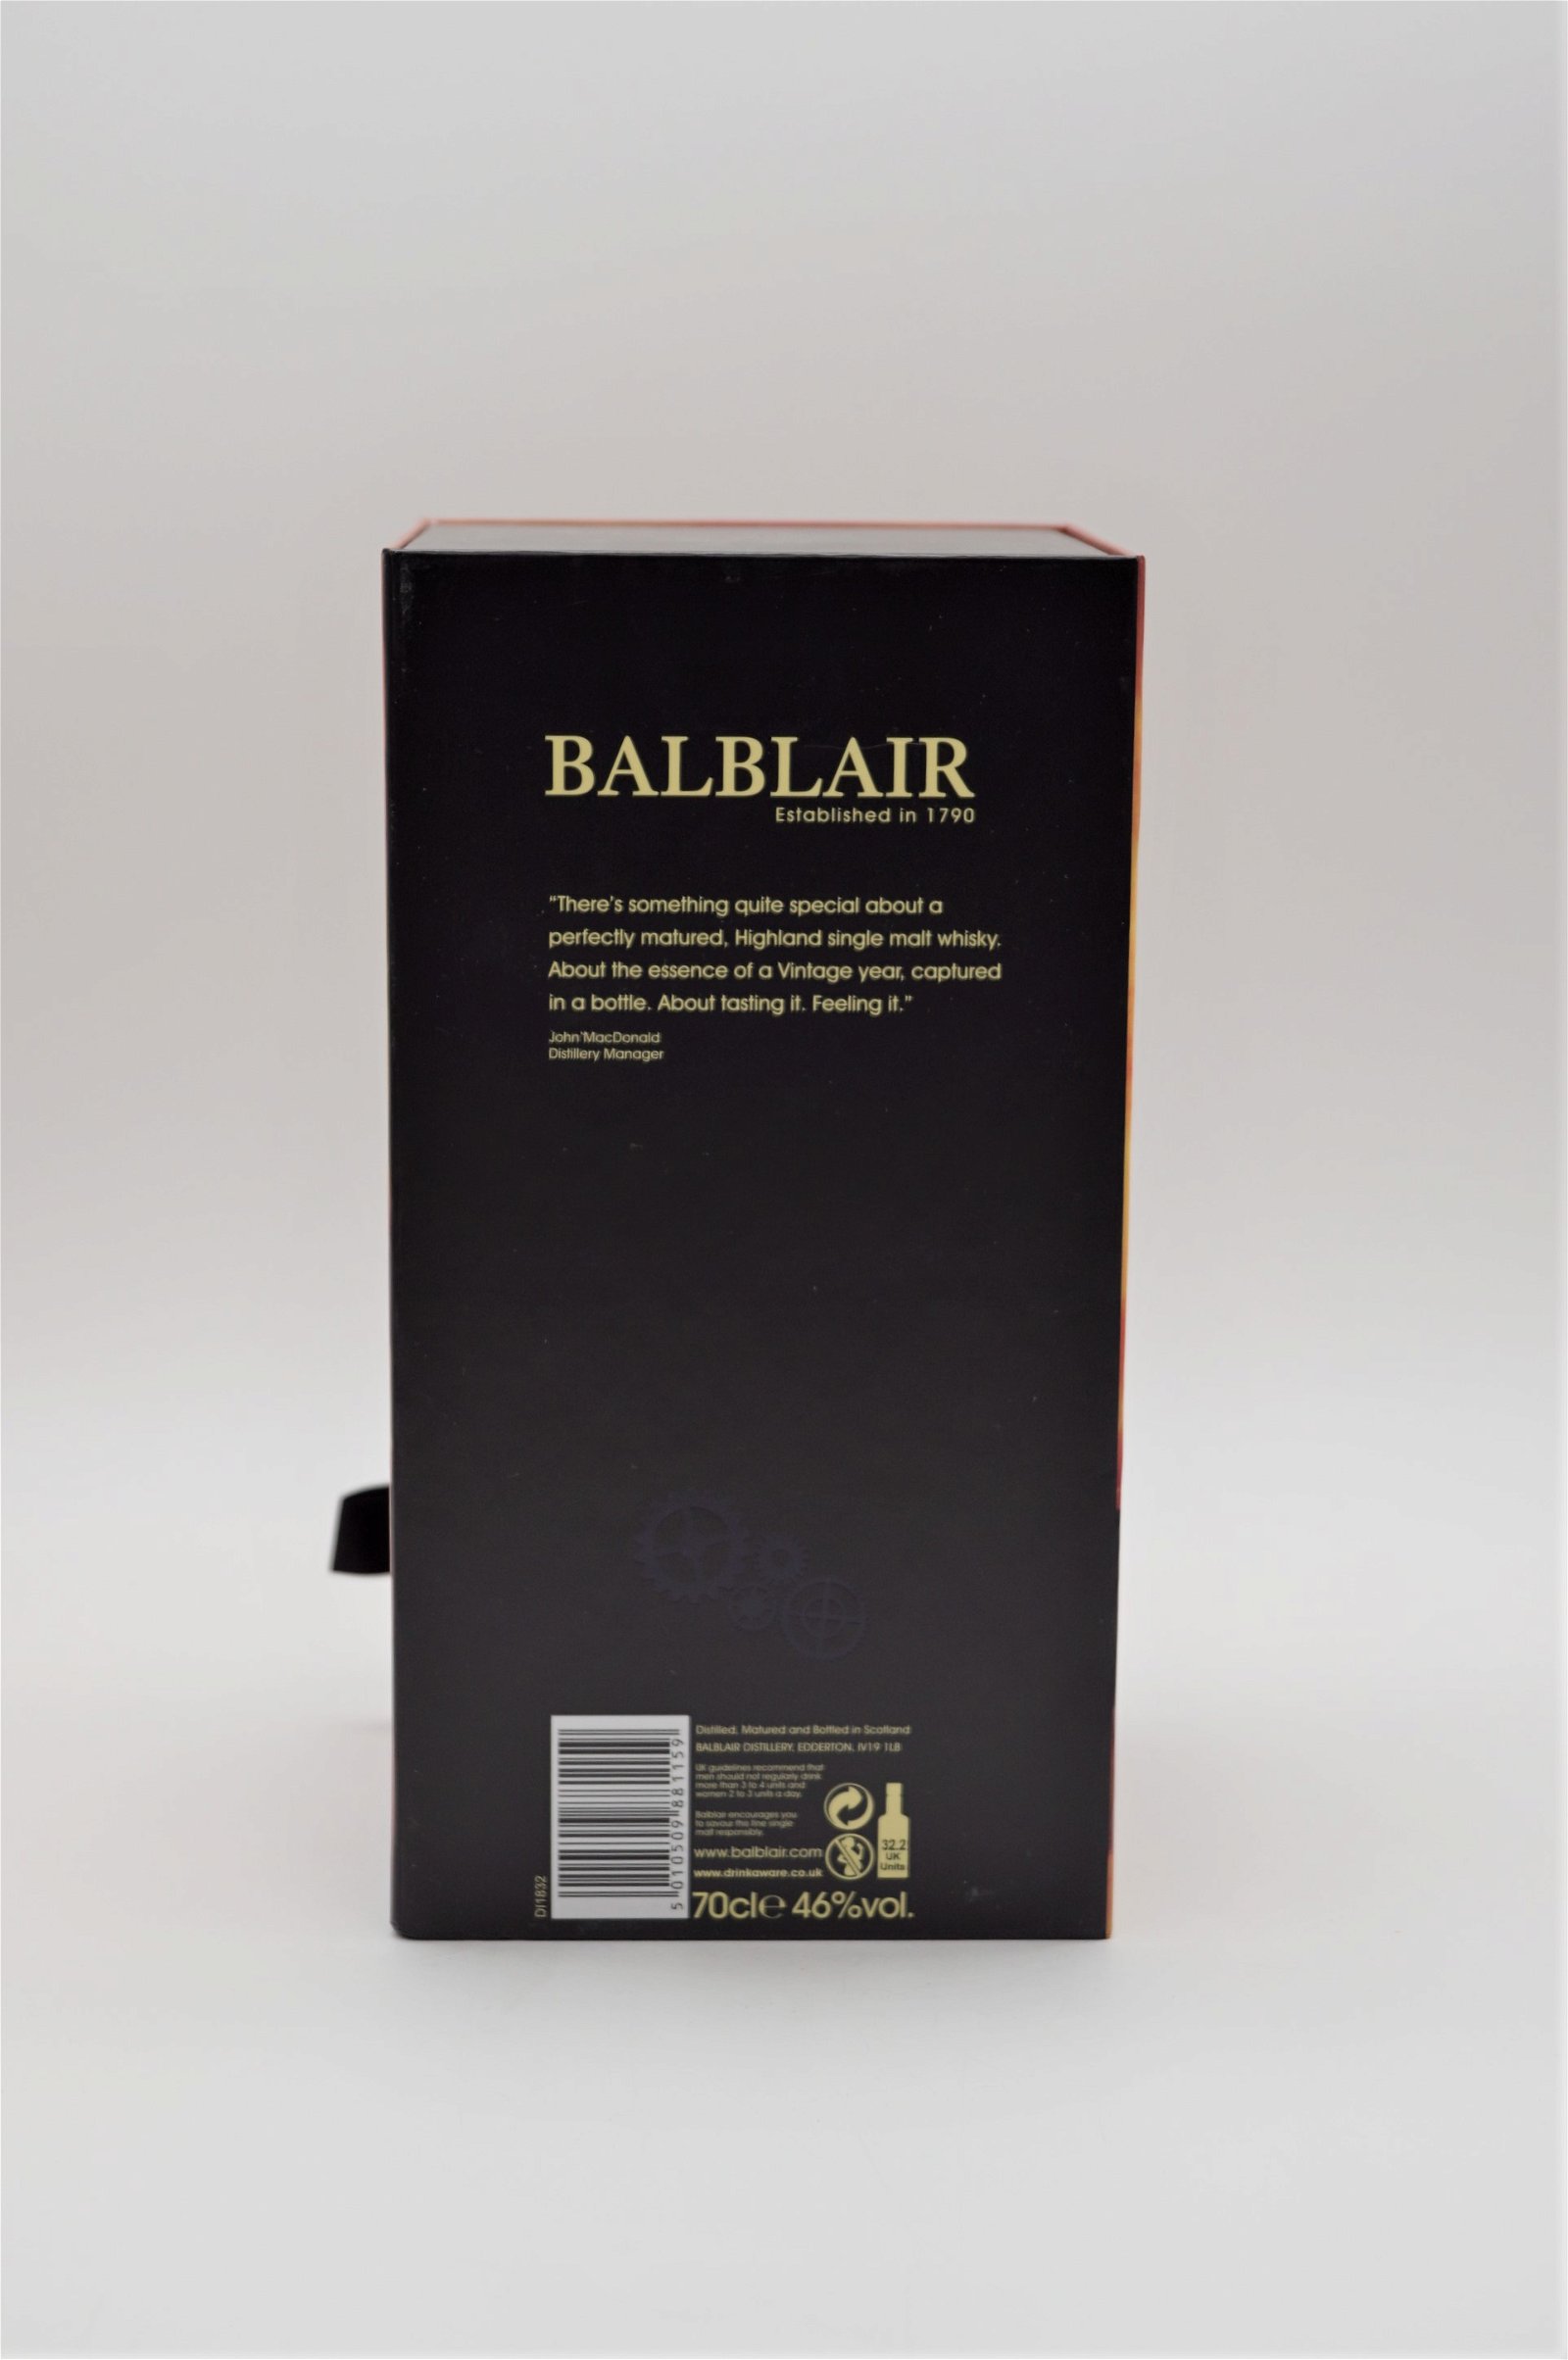 Balblair 2000 2nd Release Highland Single Malt Scotch Whisky